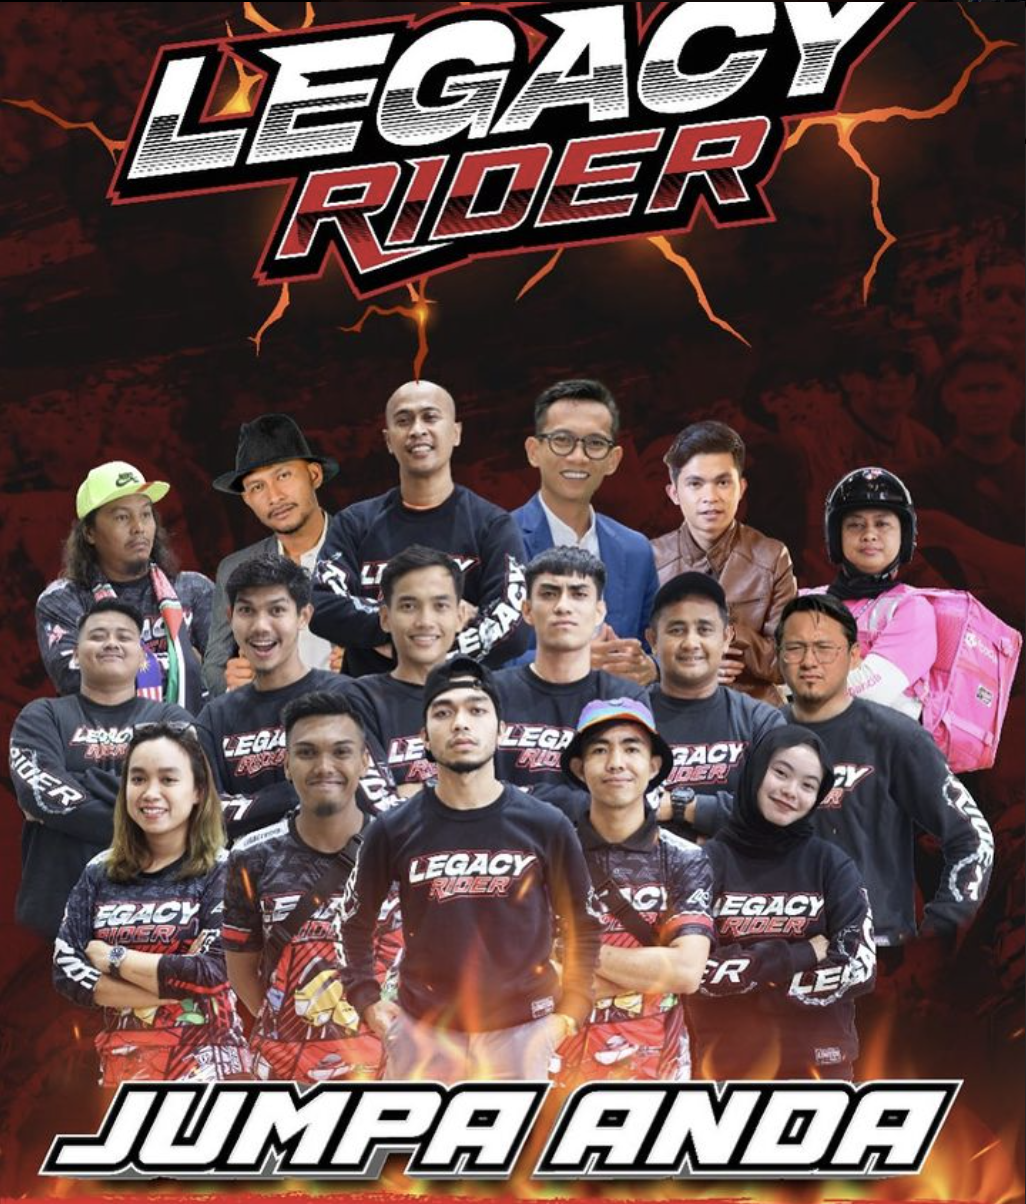 Event Legacy Rider 2.0